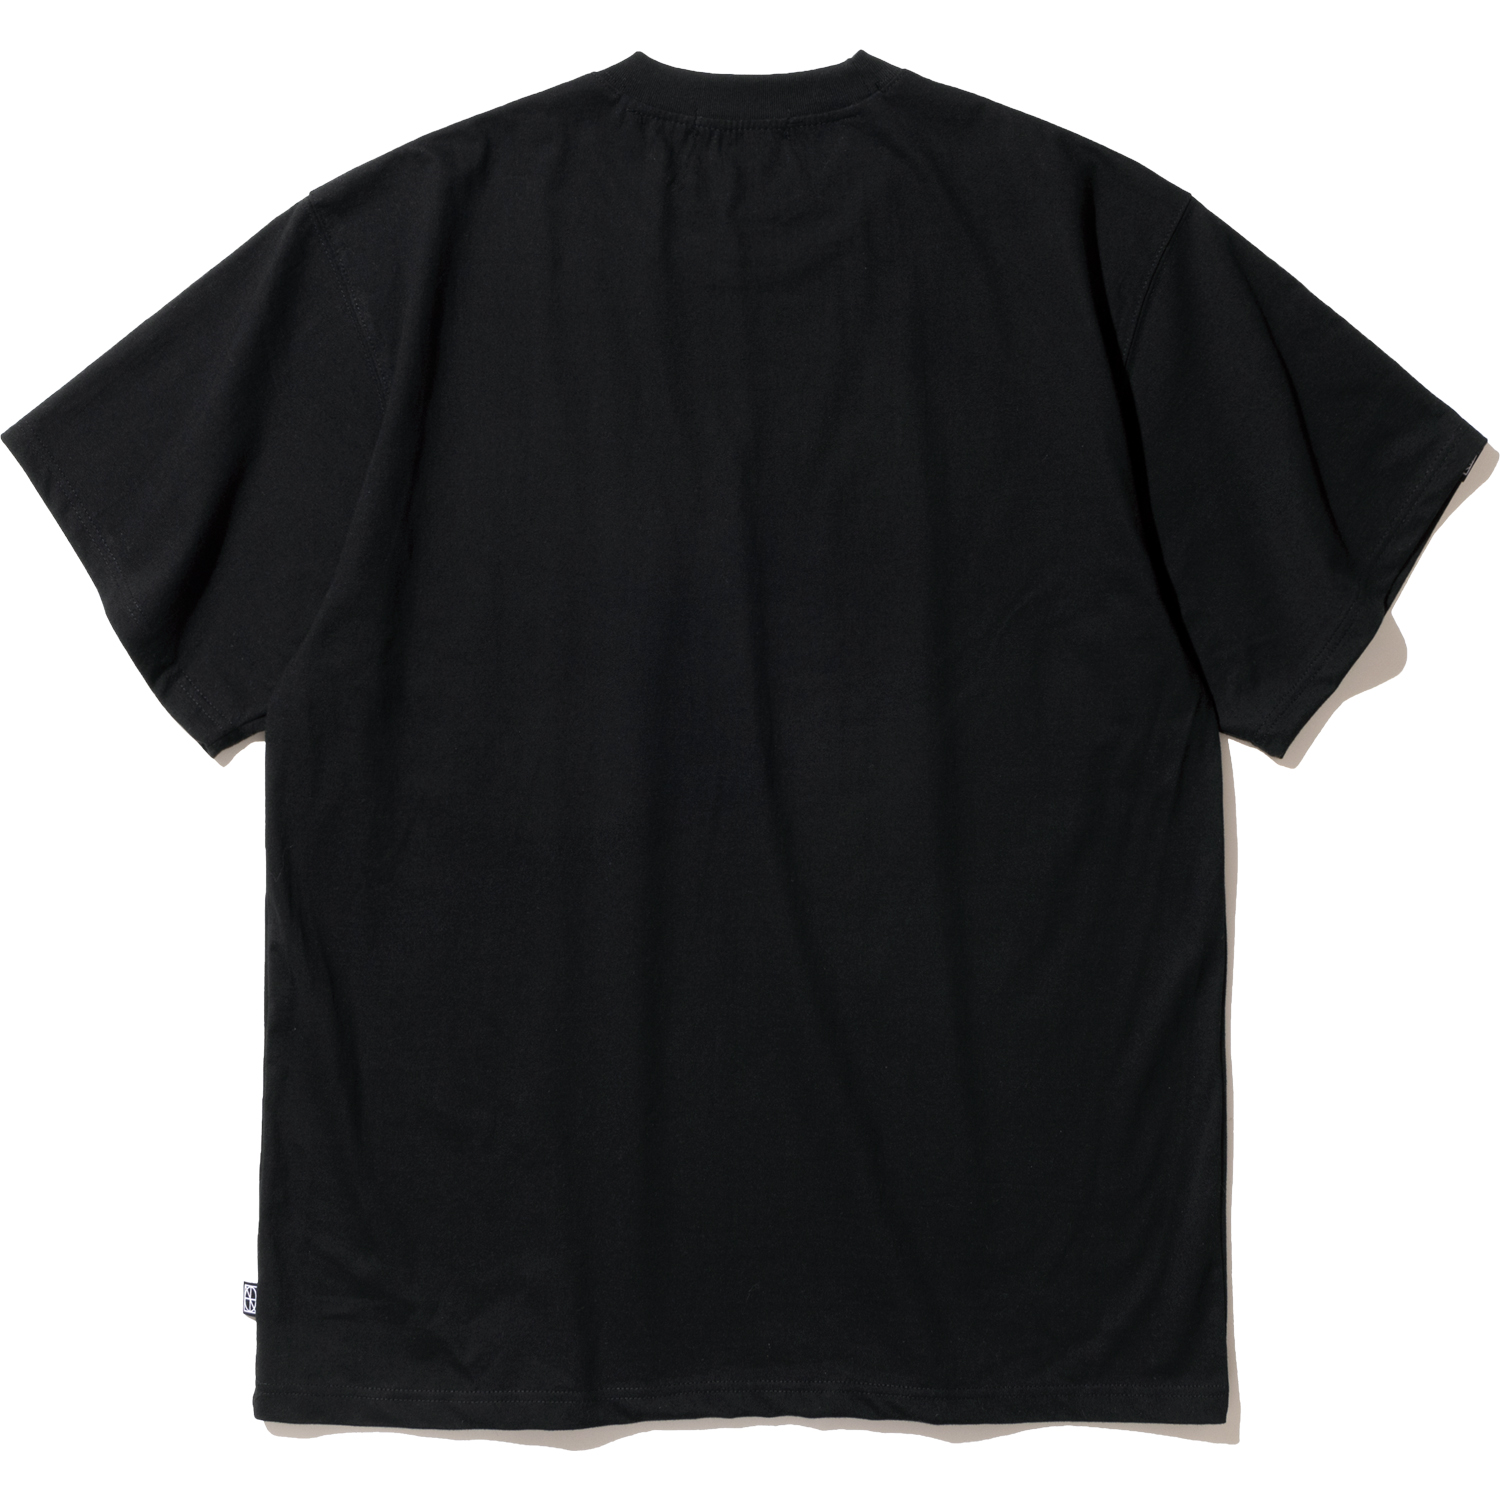 Vipers T-Shirts - Black,NOT4NERD